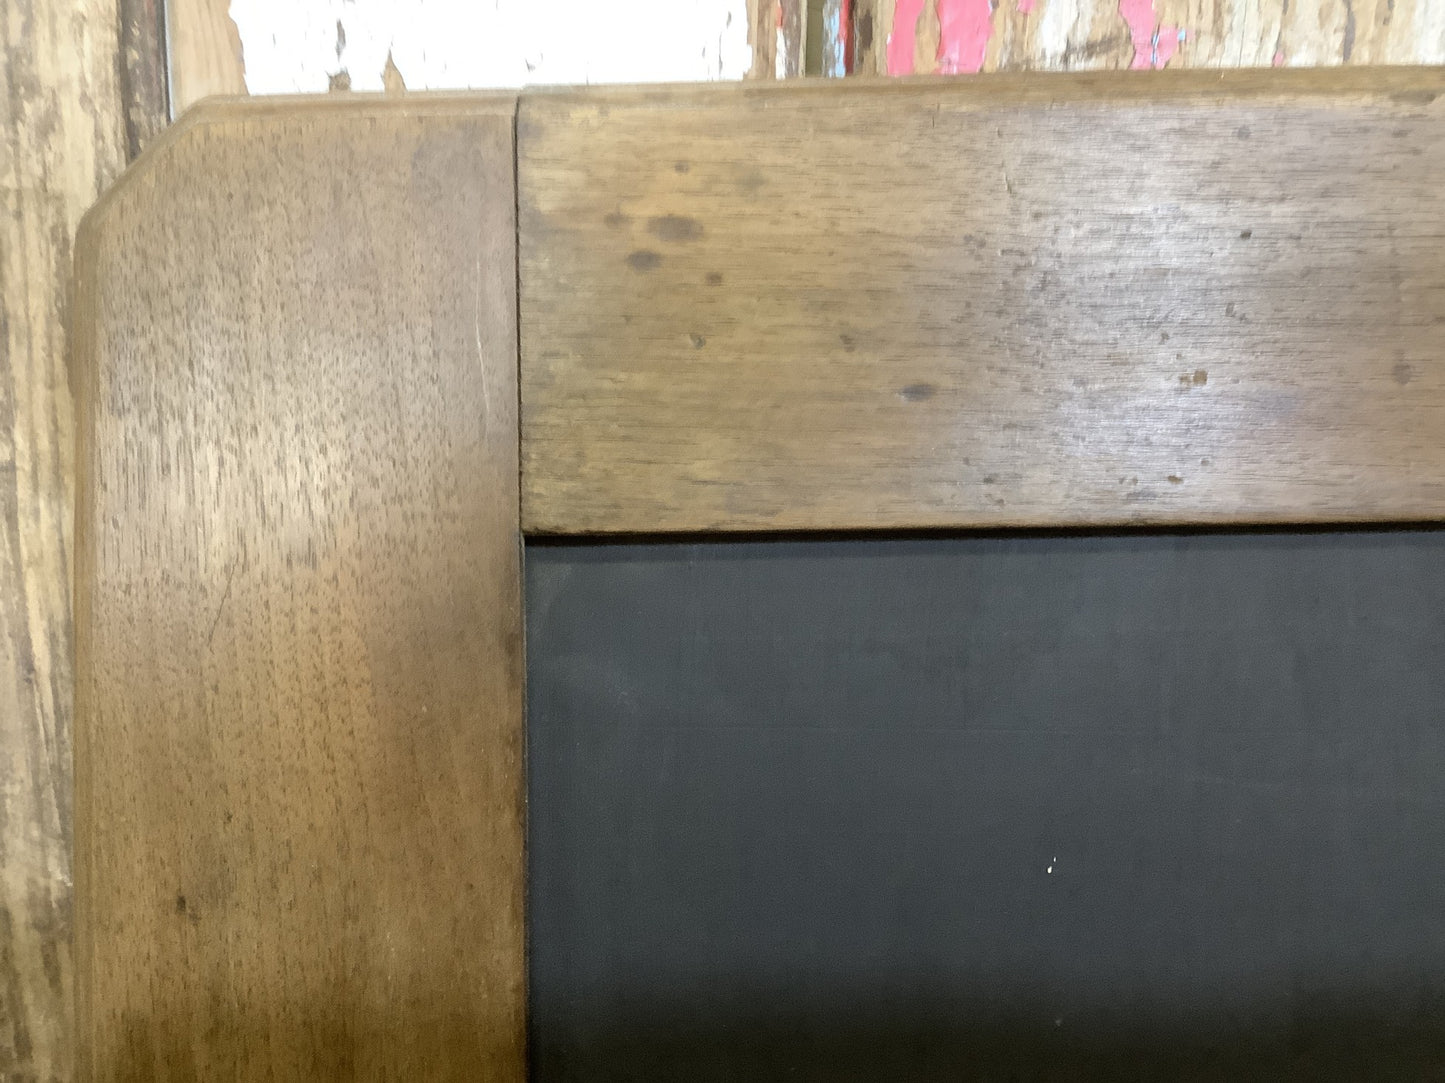 2'5"Hx1'5"W Old Mahogany Mirror Frame Turned To a Blackboard Noticeboard